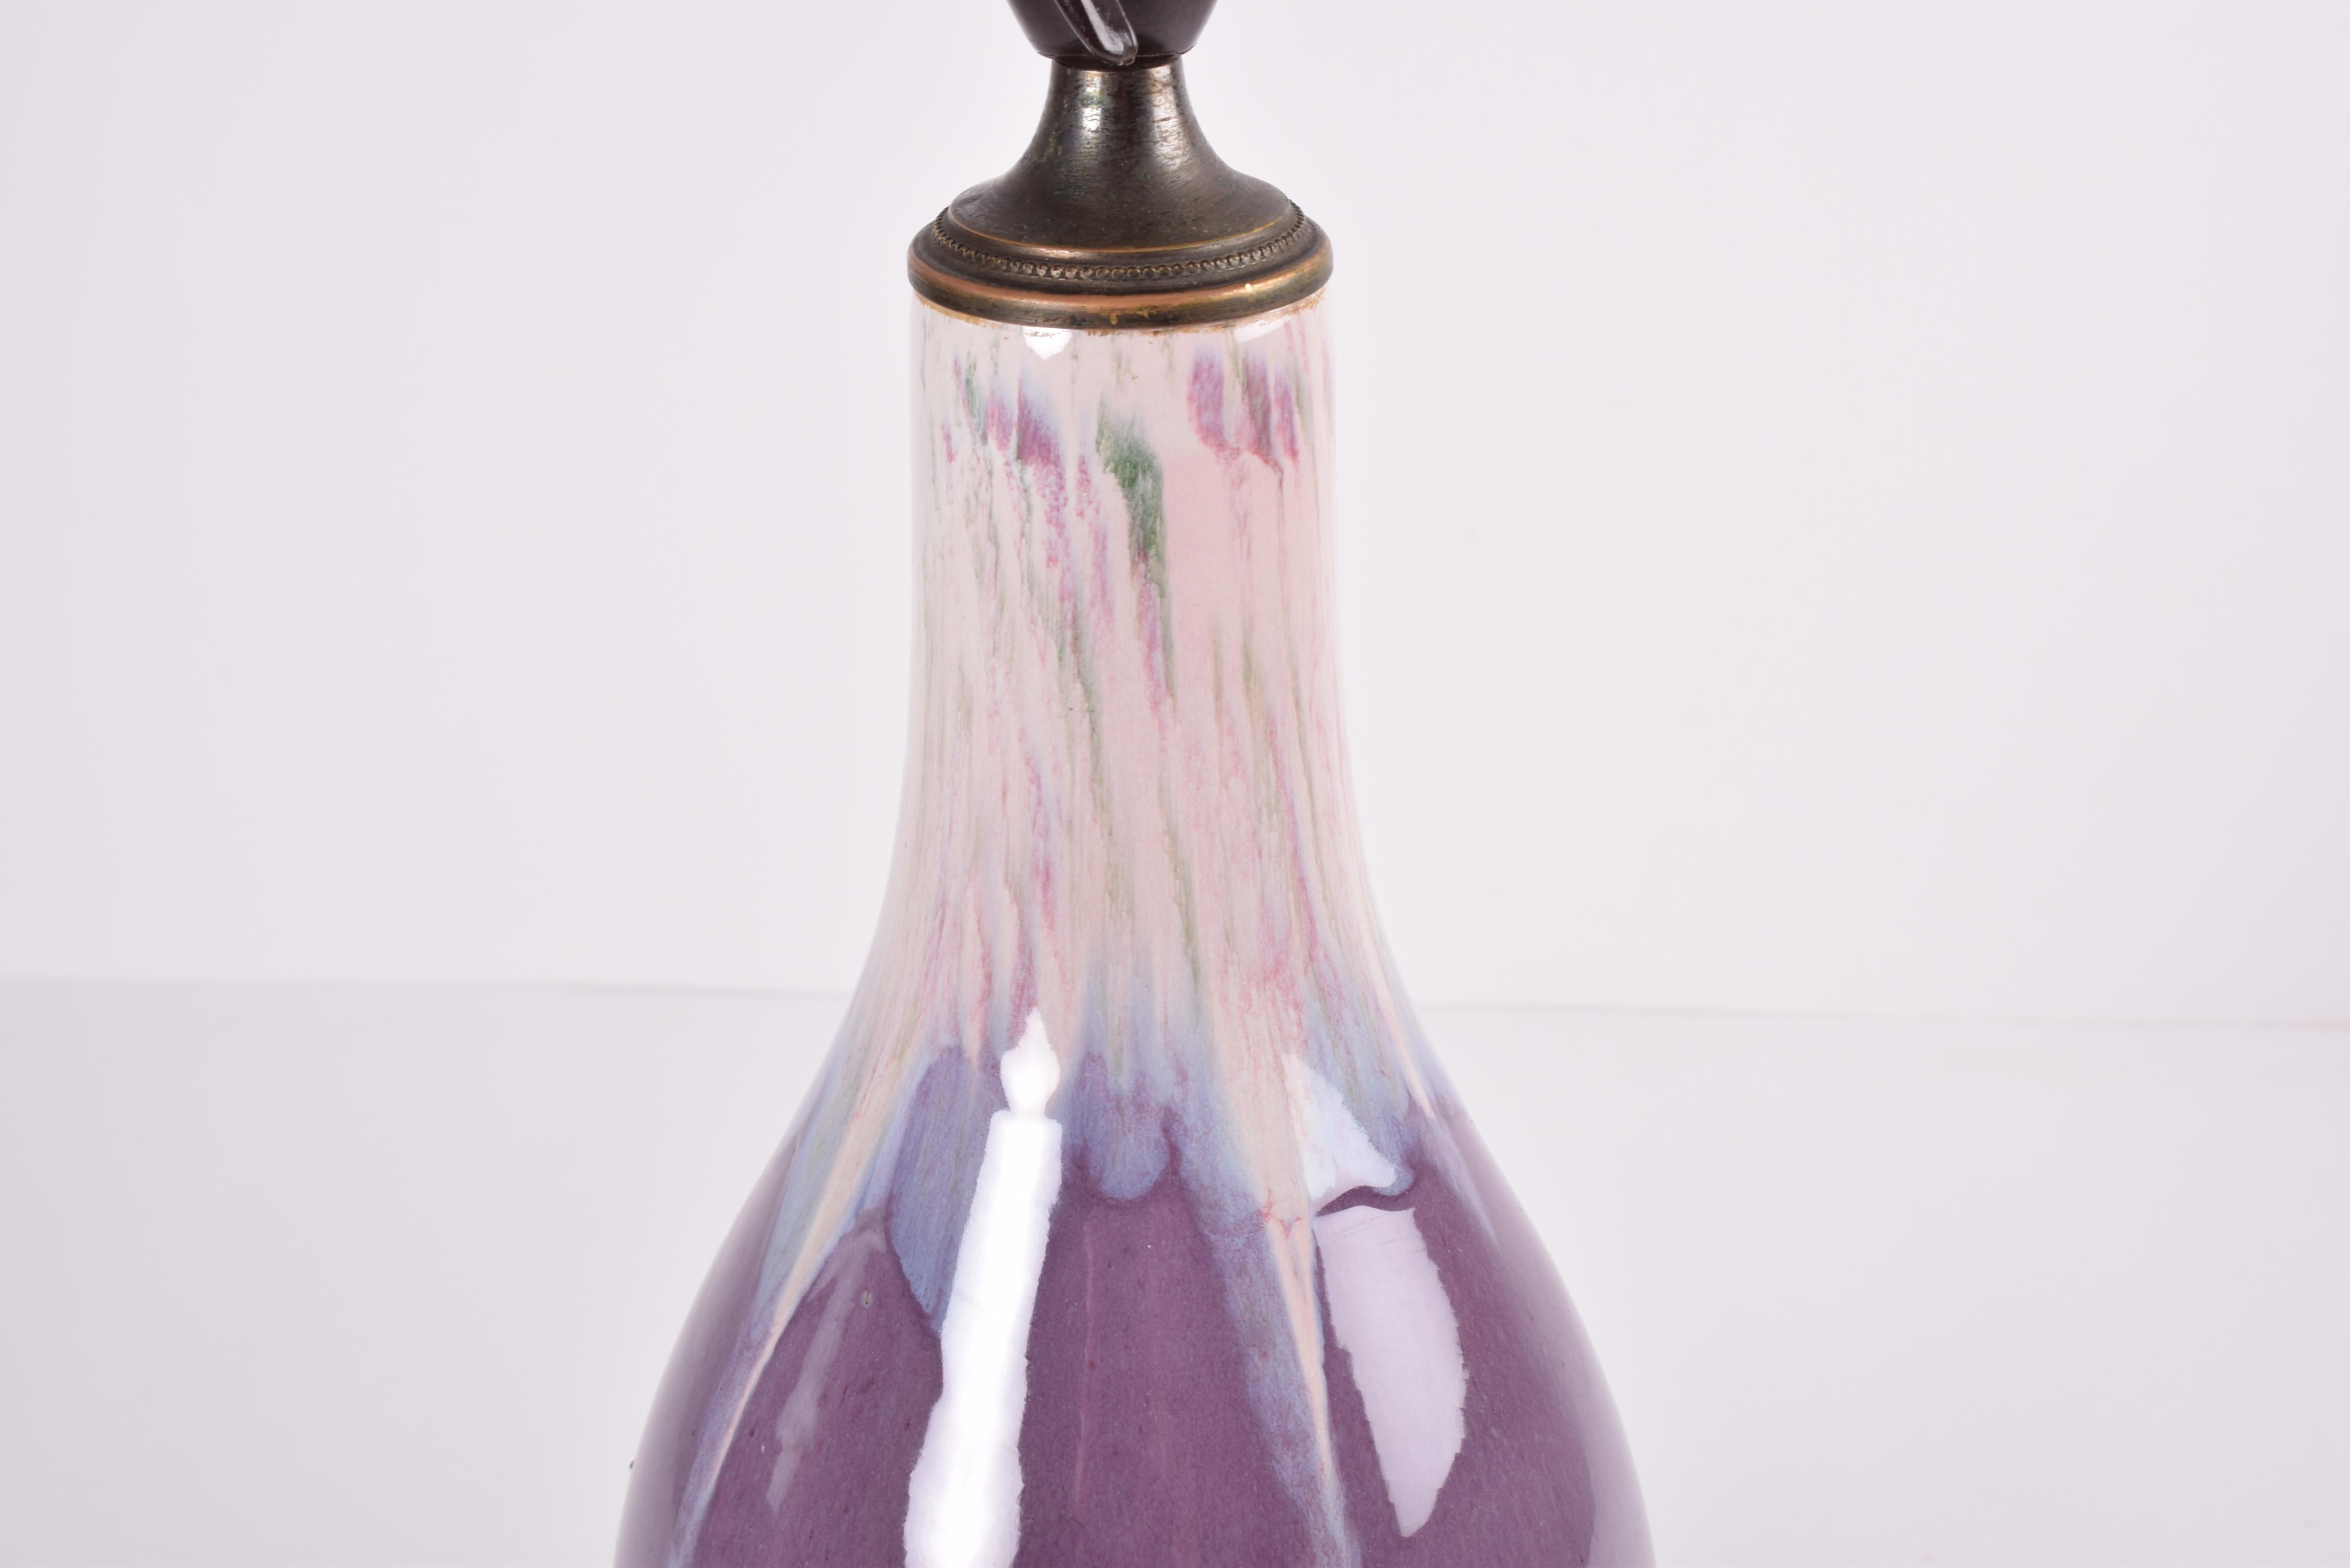 Danish Art Nouveau MA&S Tall Ceramic Table Lamp Purple Beige Drip Glaze, 1920s In Good Condition For Sale In Aarhus C, DK